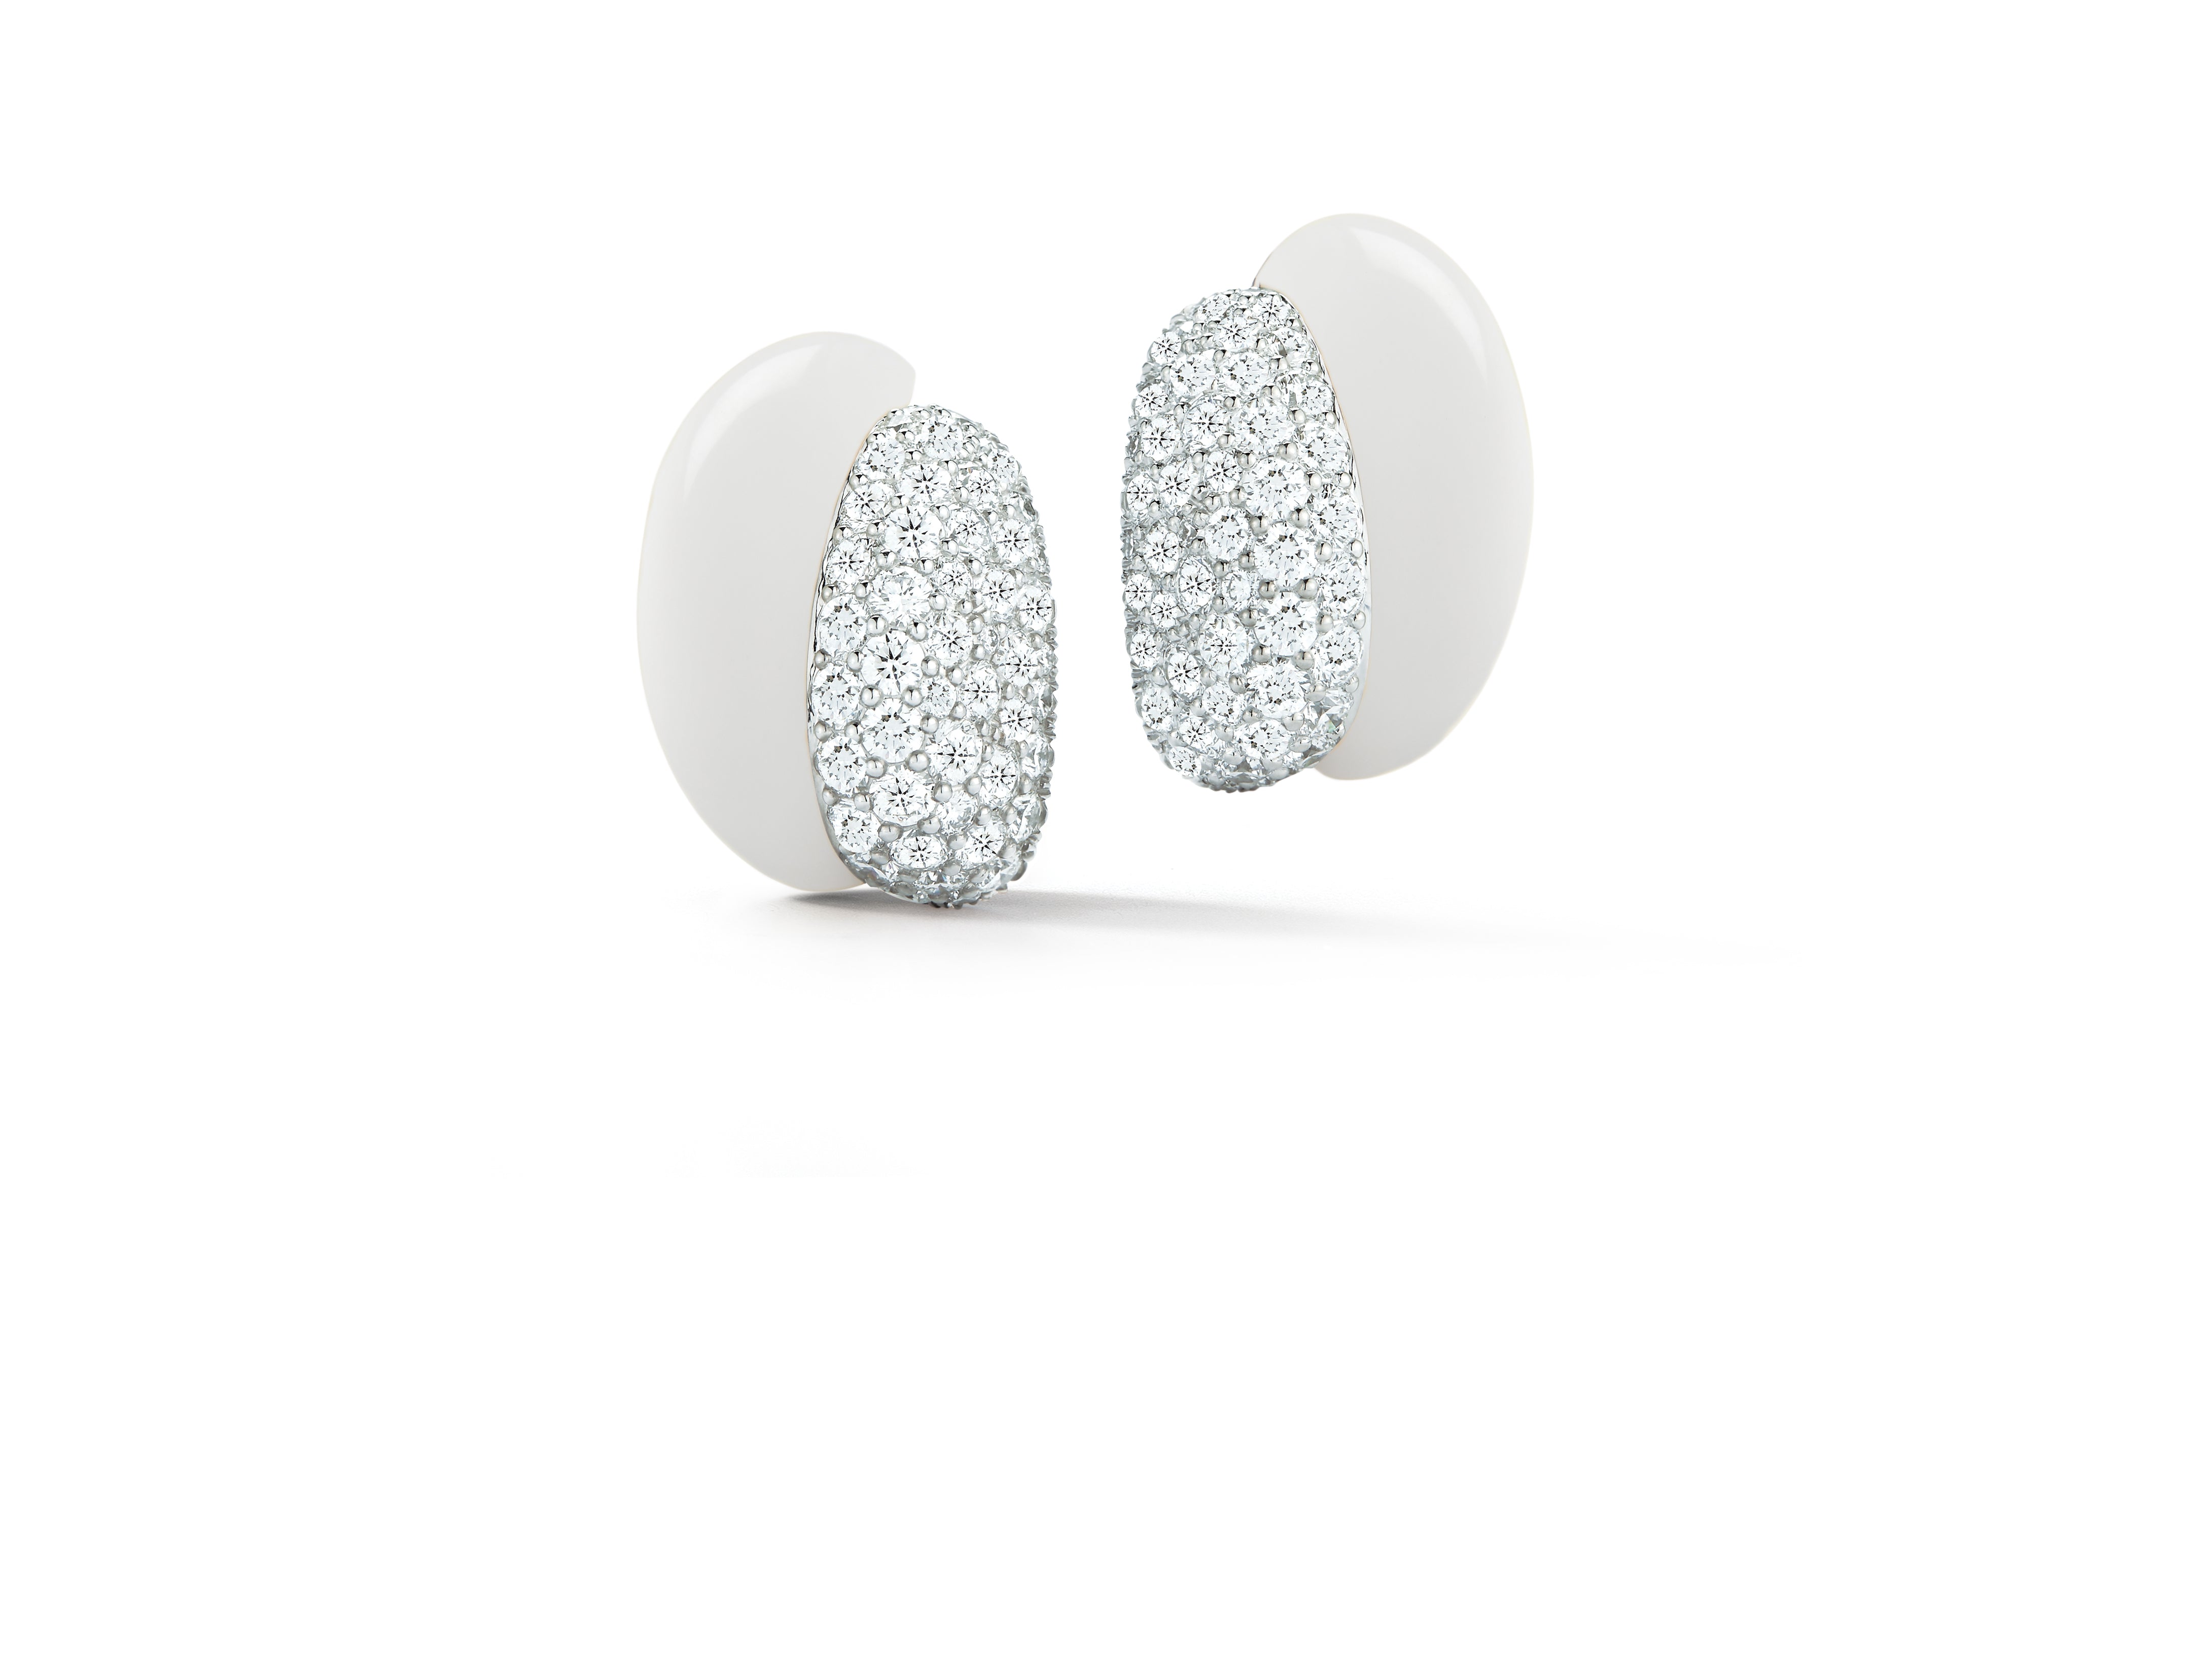 Silhouette Earrings in White Ceramic & Diamond